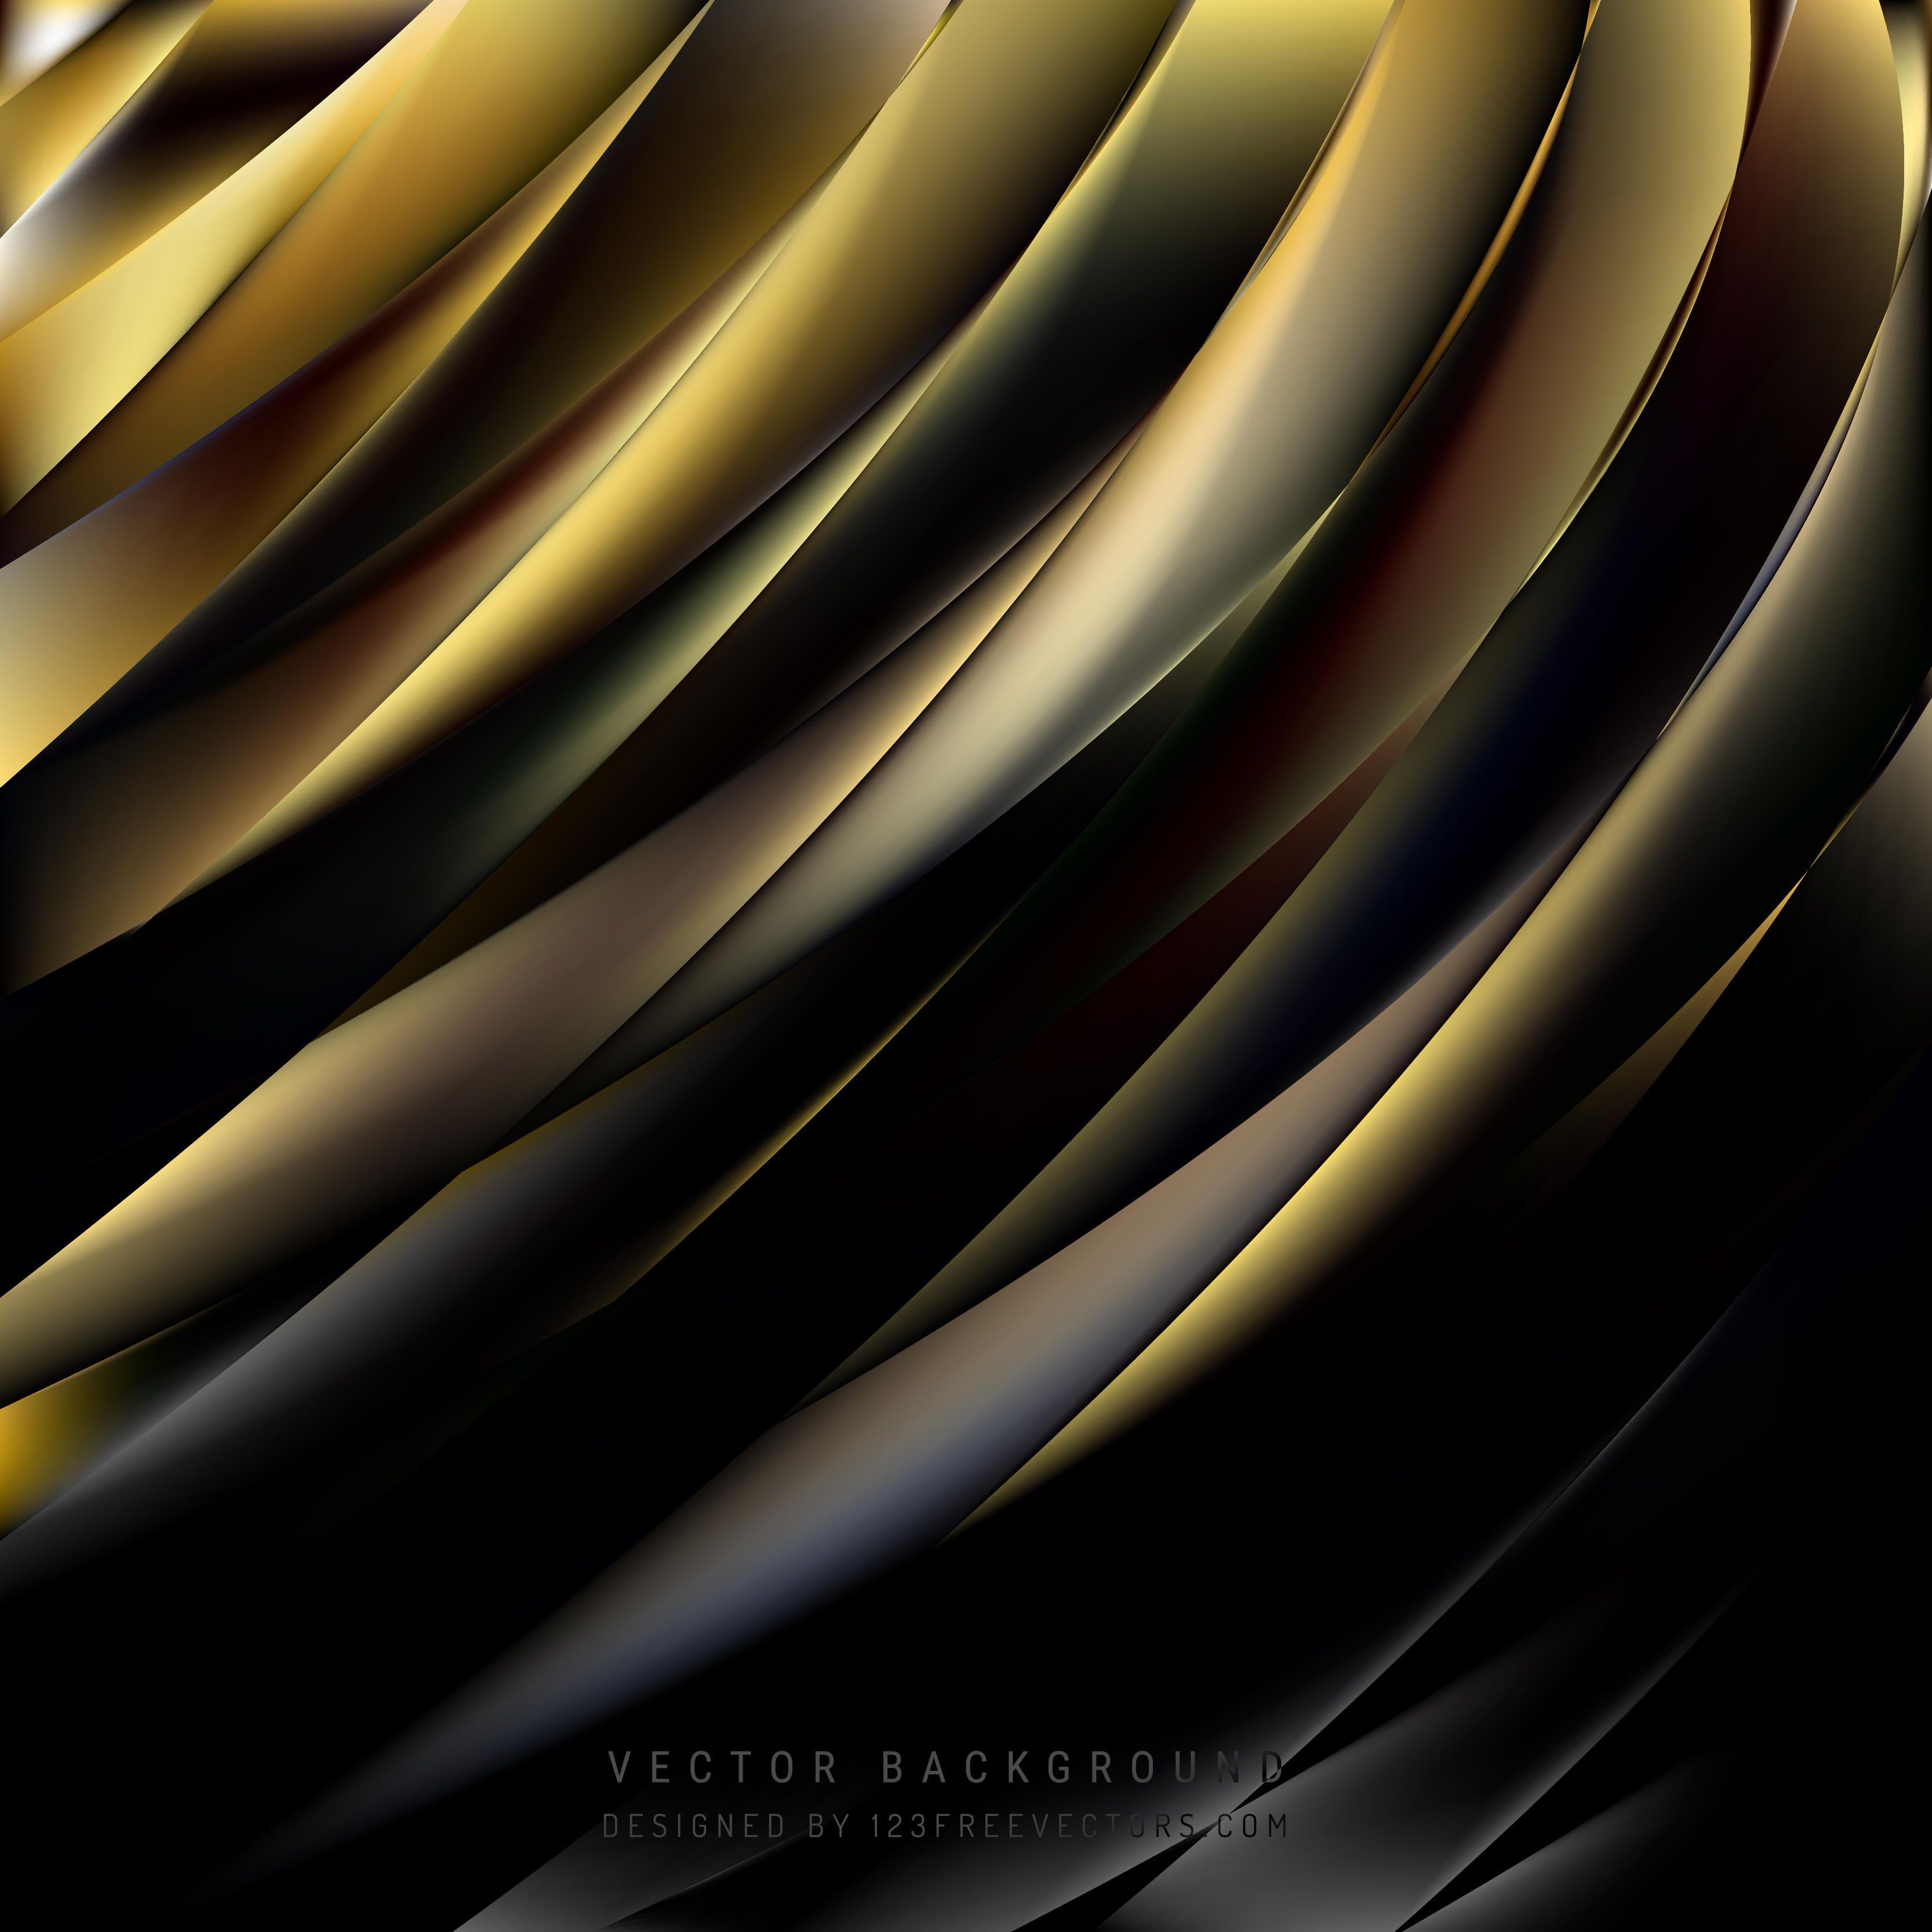 Black Gold Backgrounds Vector - Wallpaper Cave